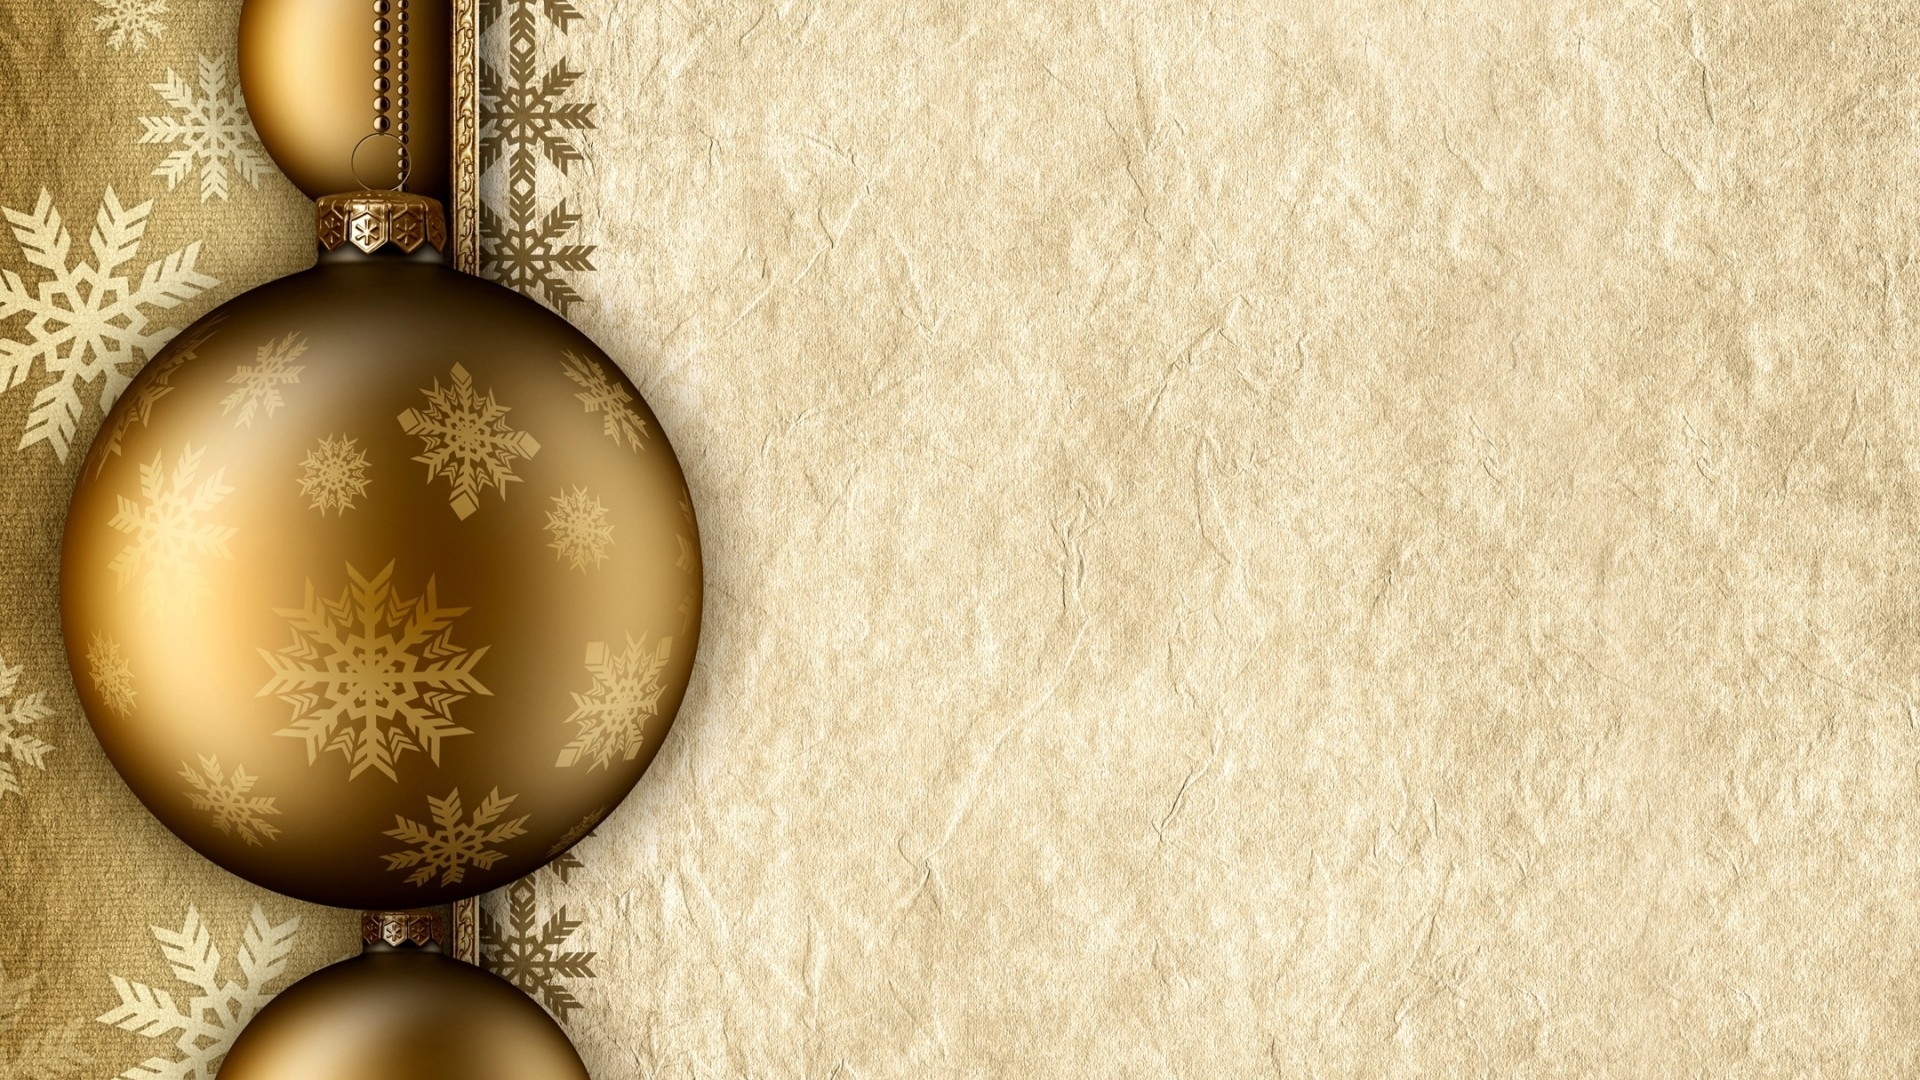 Bauble Christmas Decoration Golden Snowflake 1920x1080